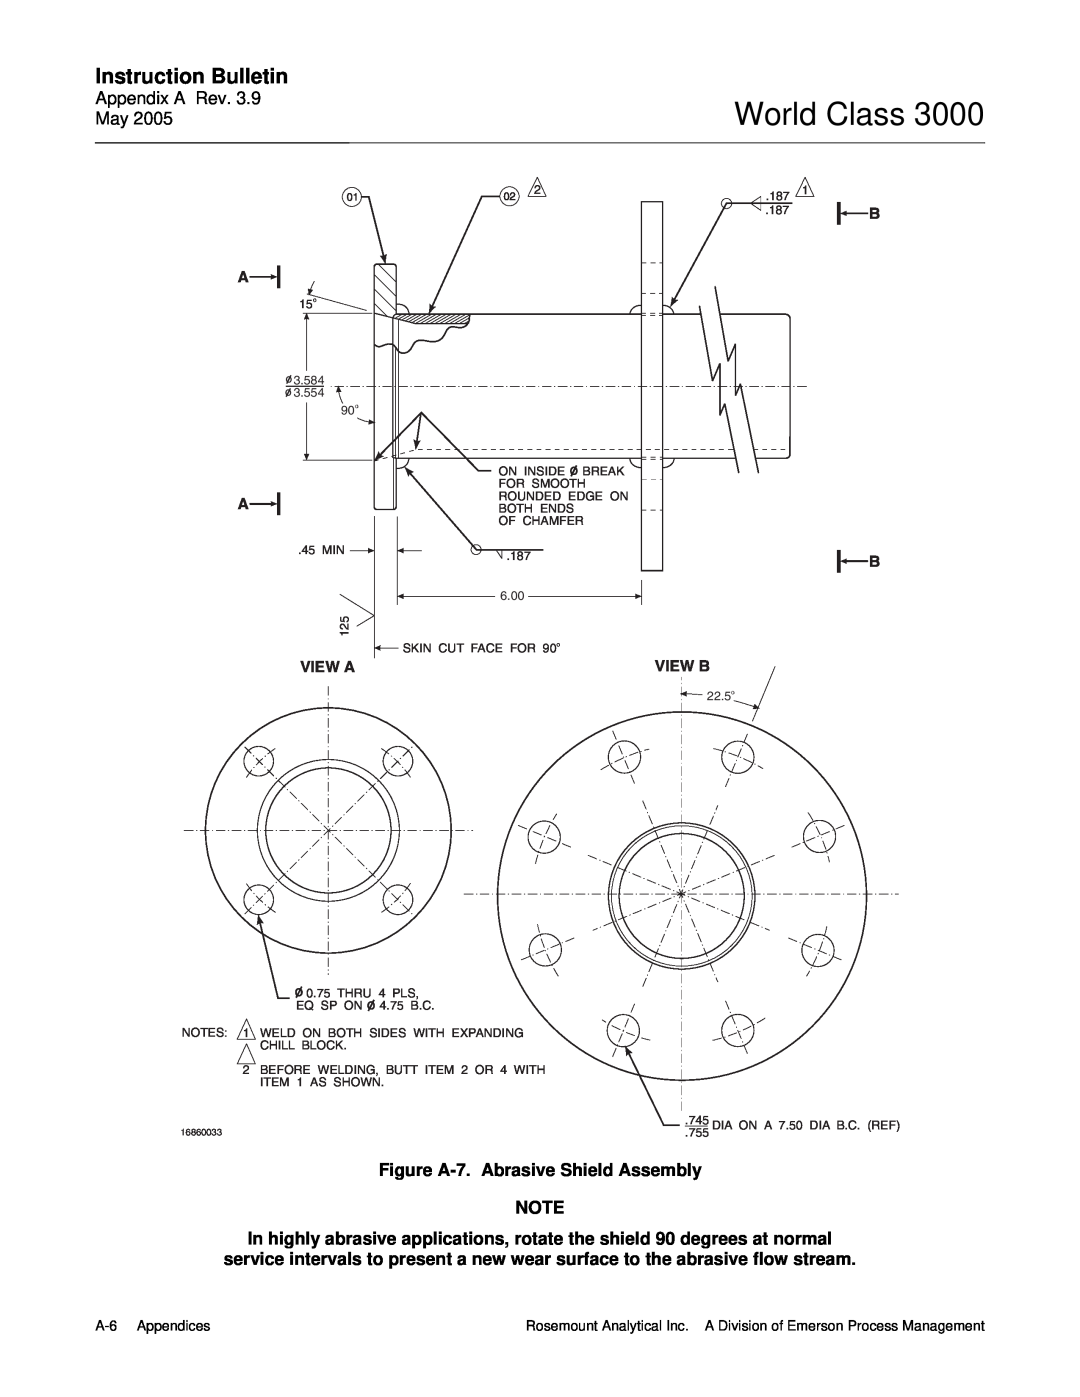 Emerson 3000 instruction manual World Class, Instruction Bulletin, Figure A-7.Abrasive Shield Assembly 